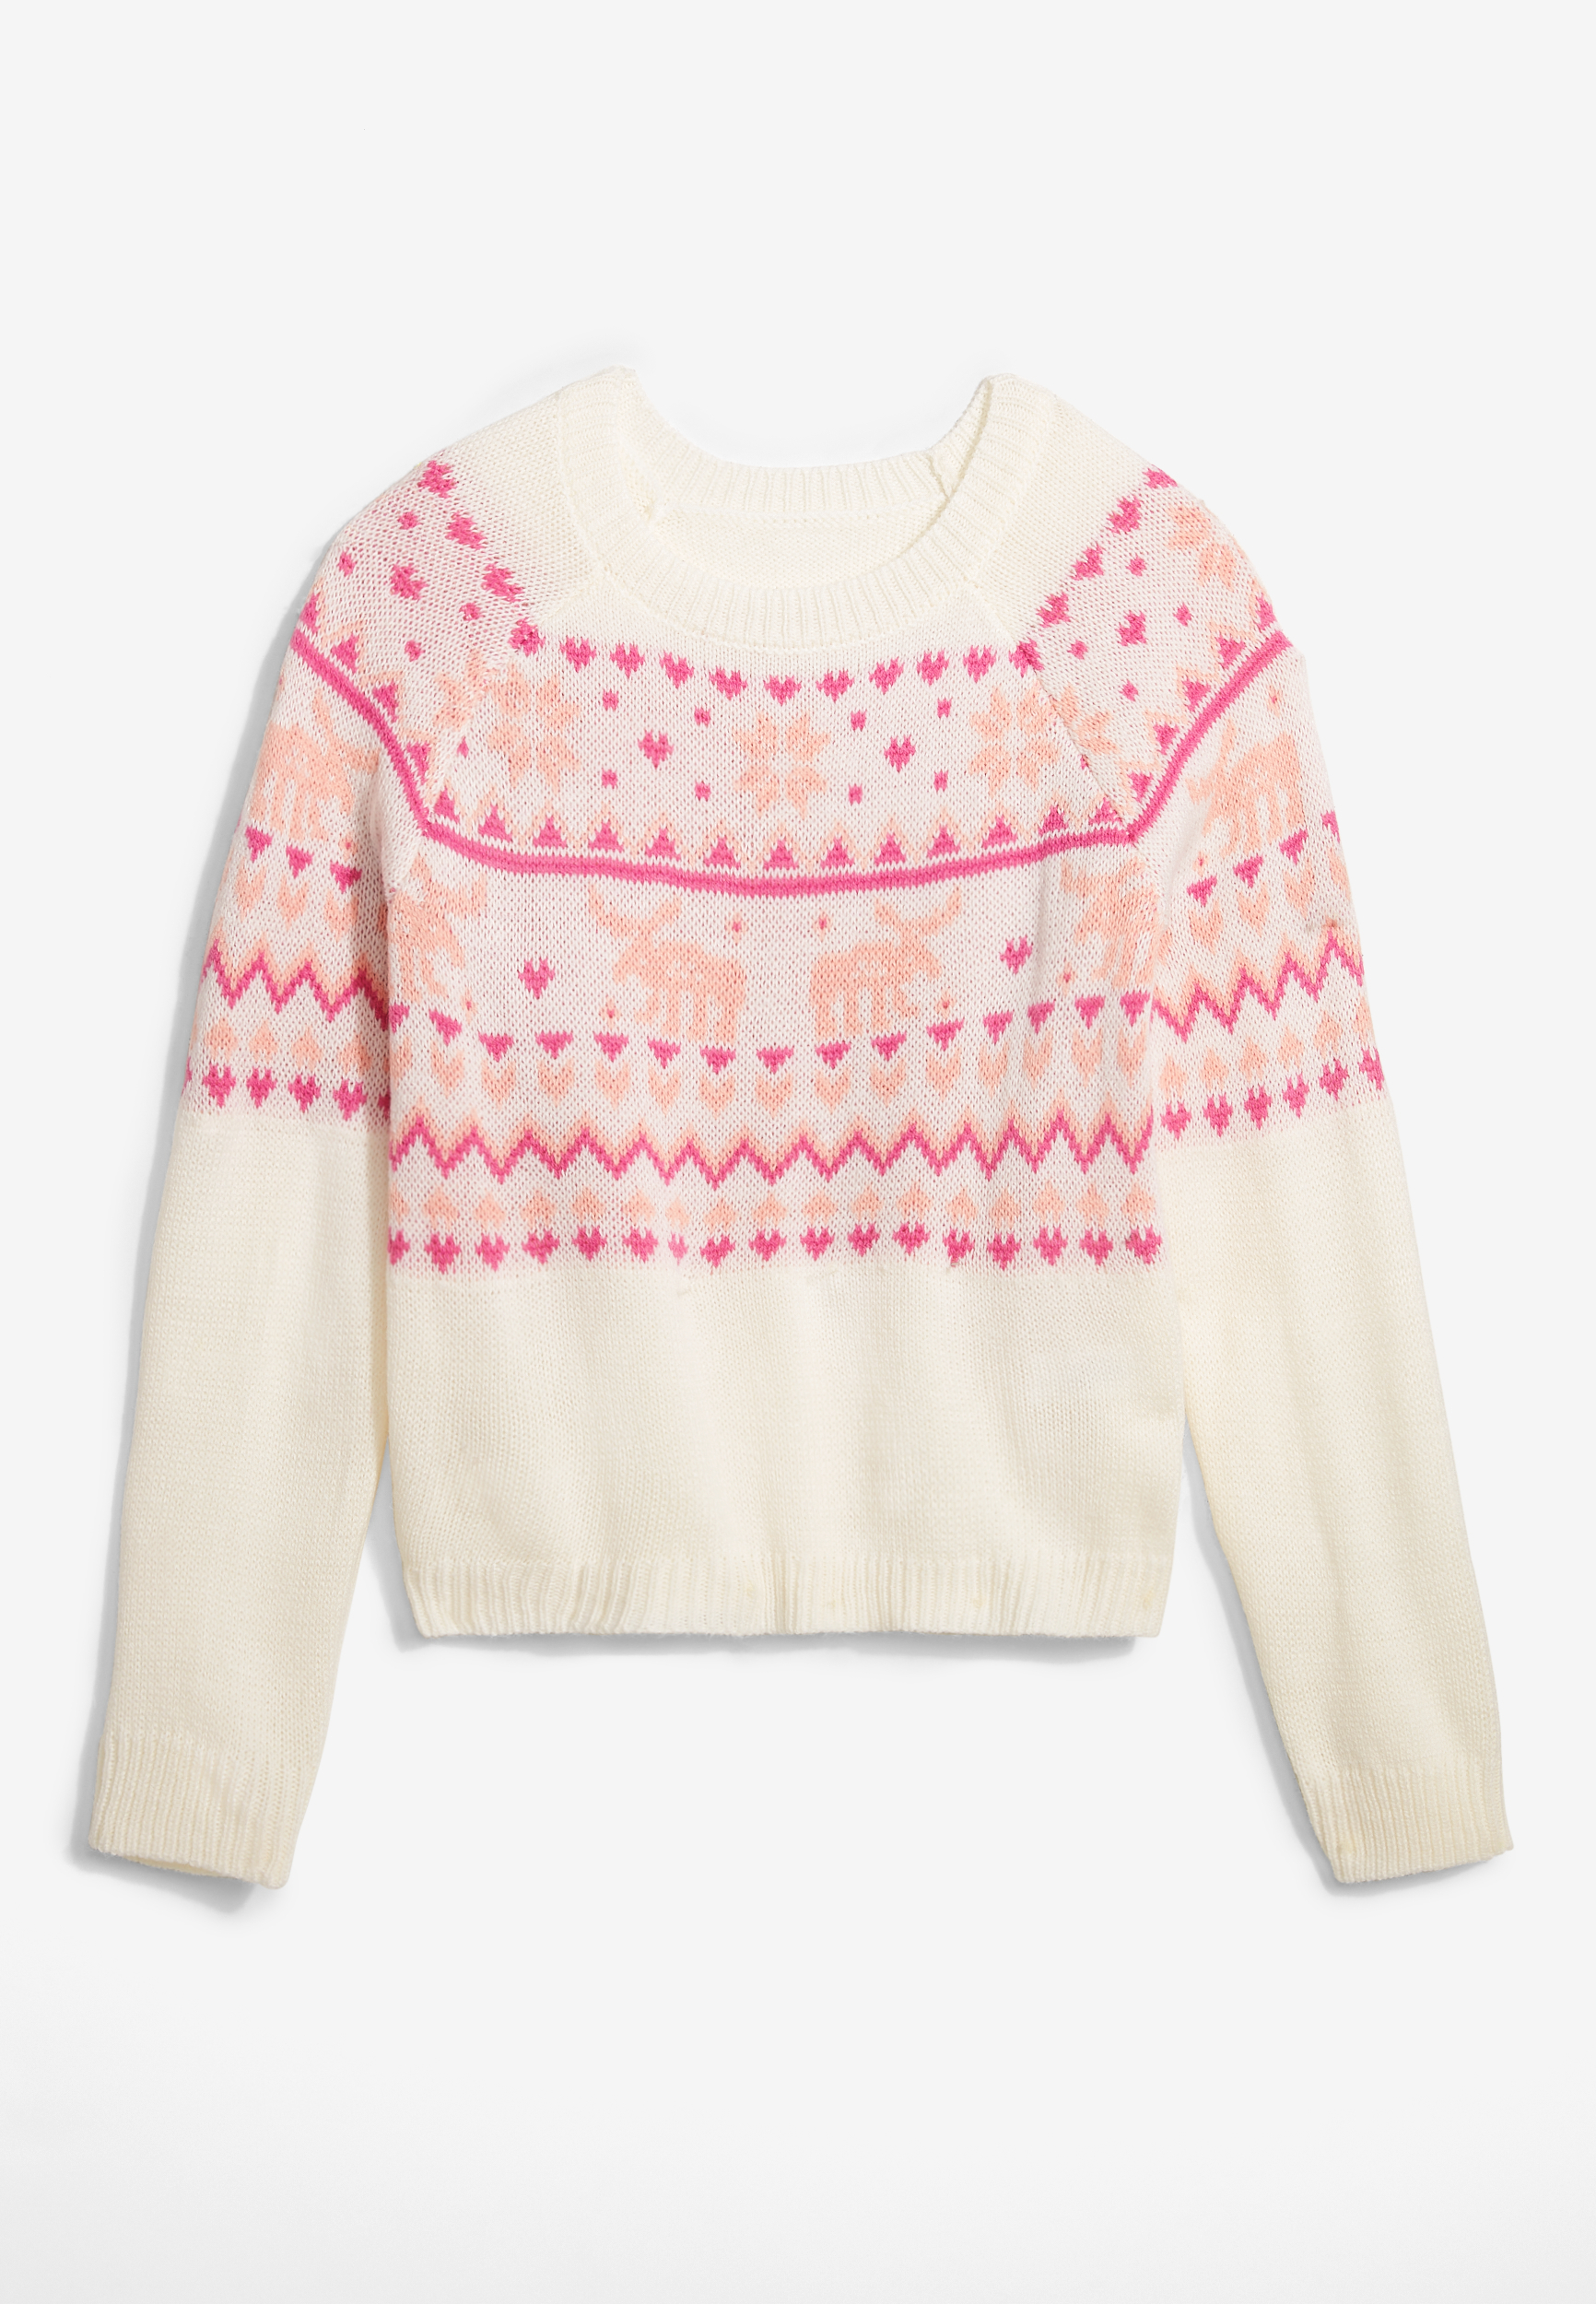 Girls Fair Isle Sweater | maurices